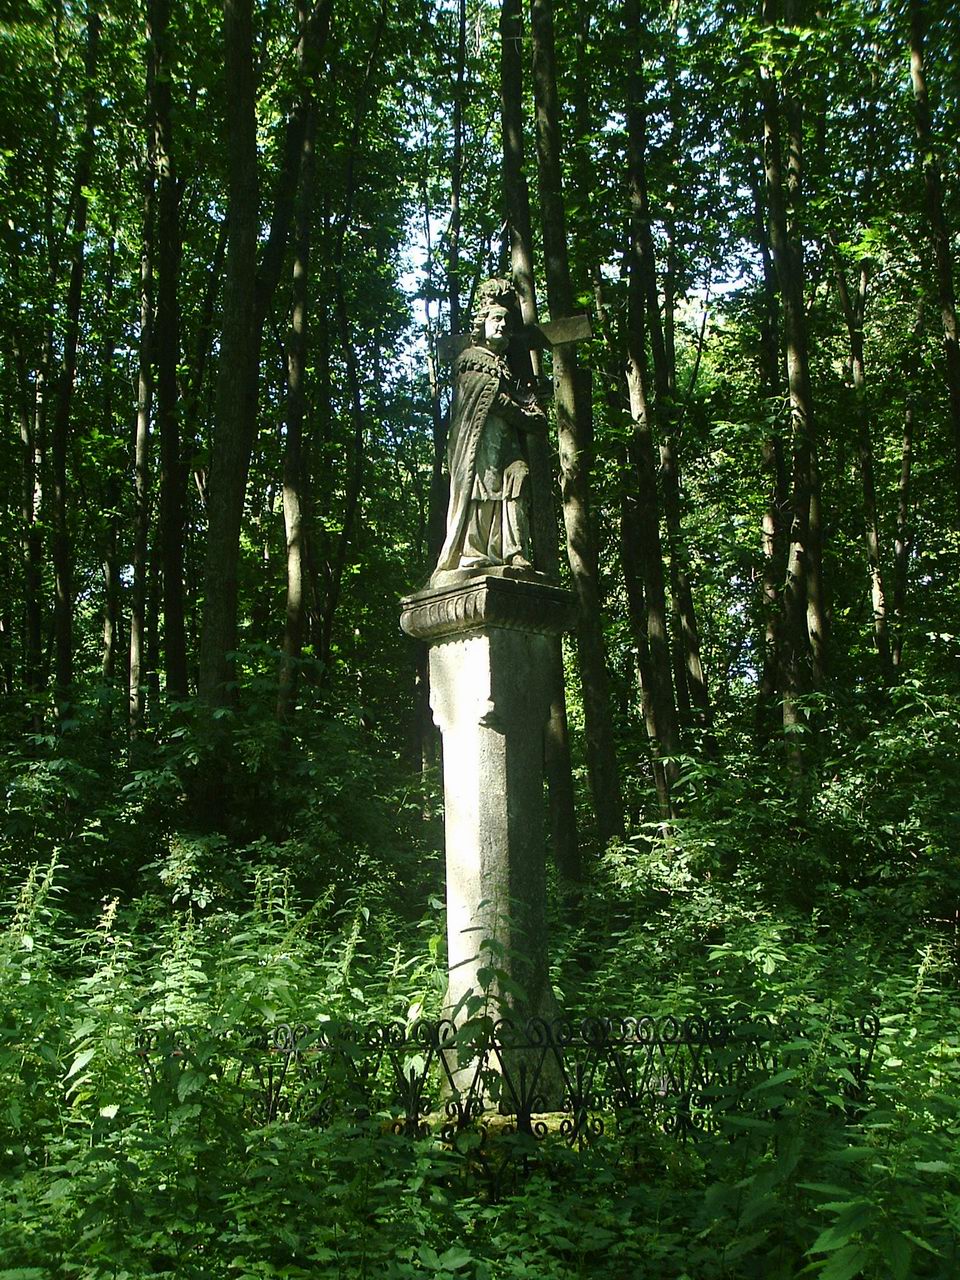 Szent Ilona sculpture in the forest